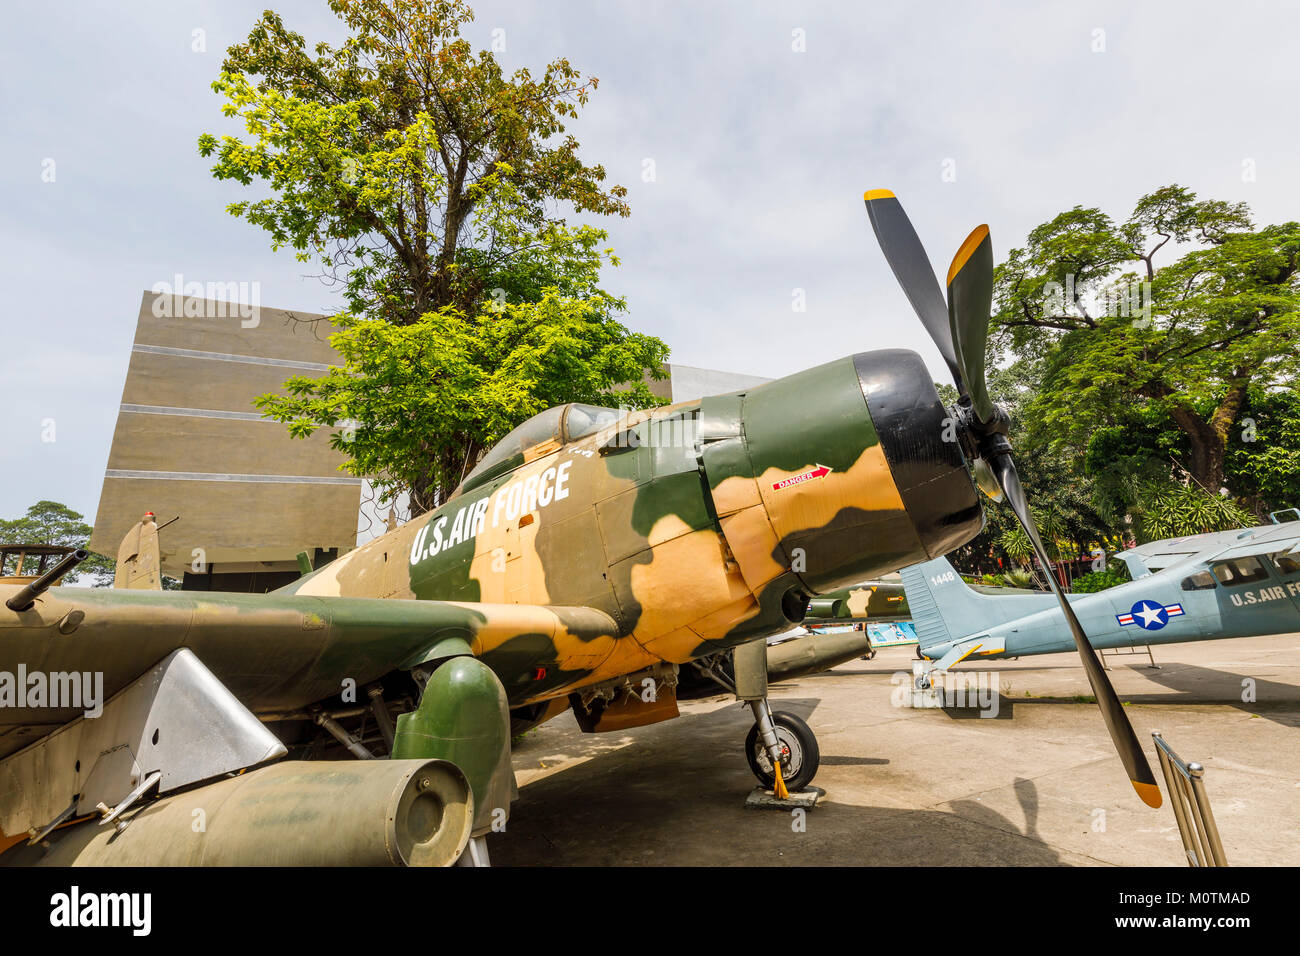 Usaf Douglas A-1 Skyraider Military Fighter Plane, An Exhibit On Display,  War Remnants Museum Of Vietnam War, Saigon (Ho Chi Minh City), South  Vietnam Stock Photo - Alamy